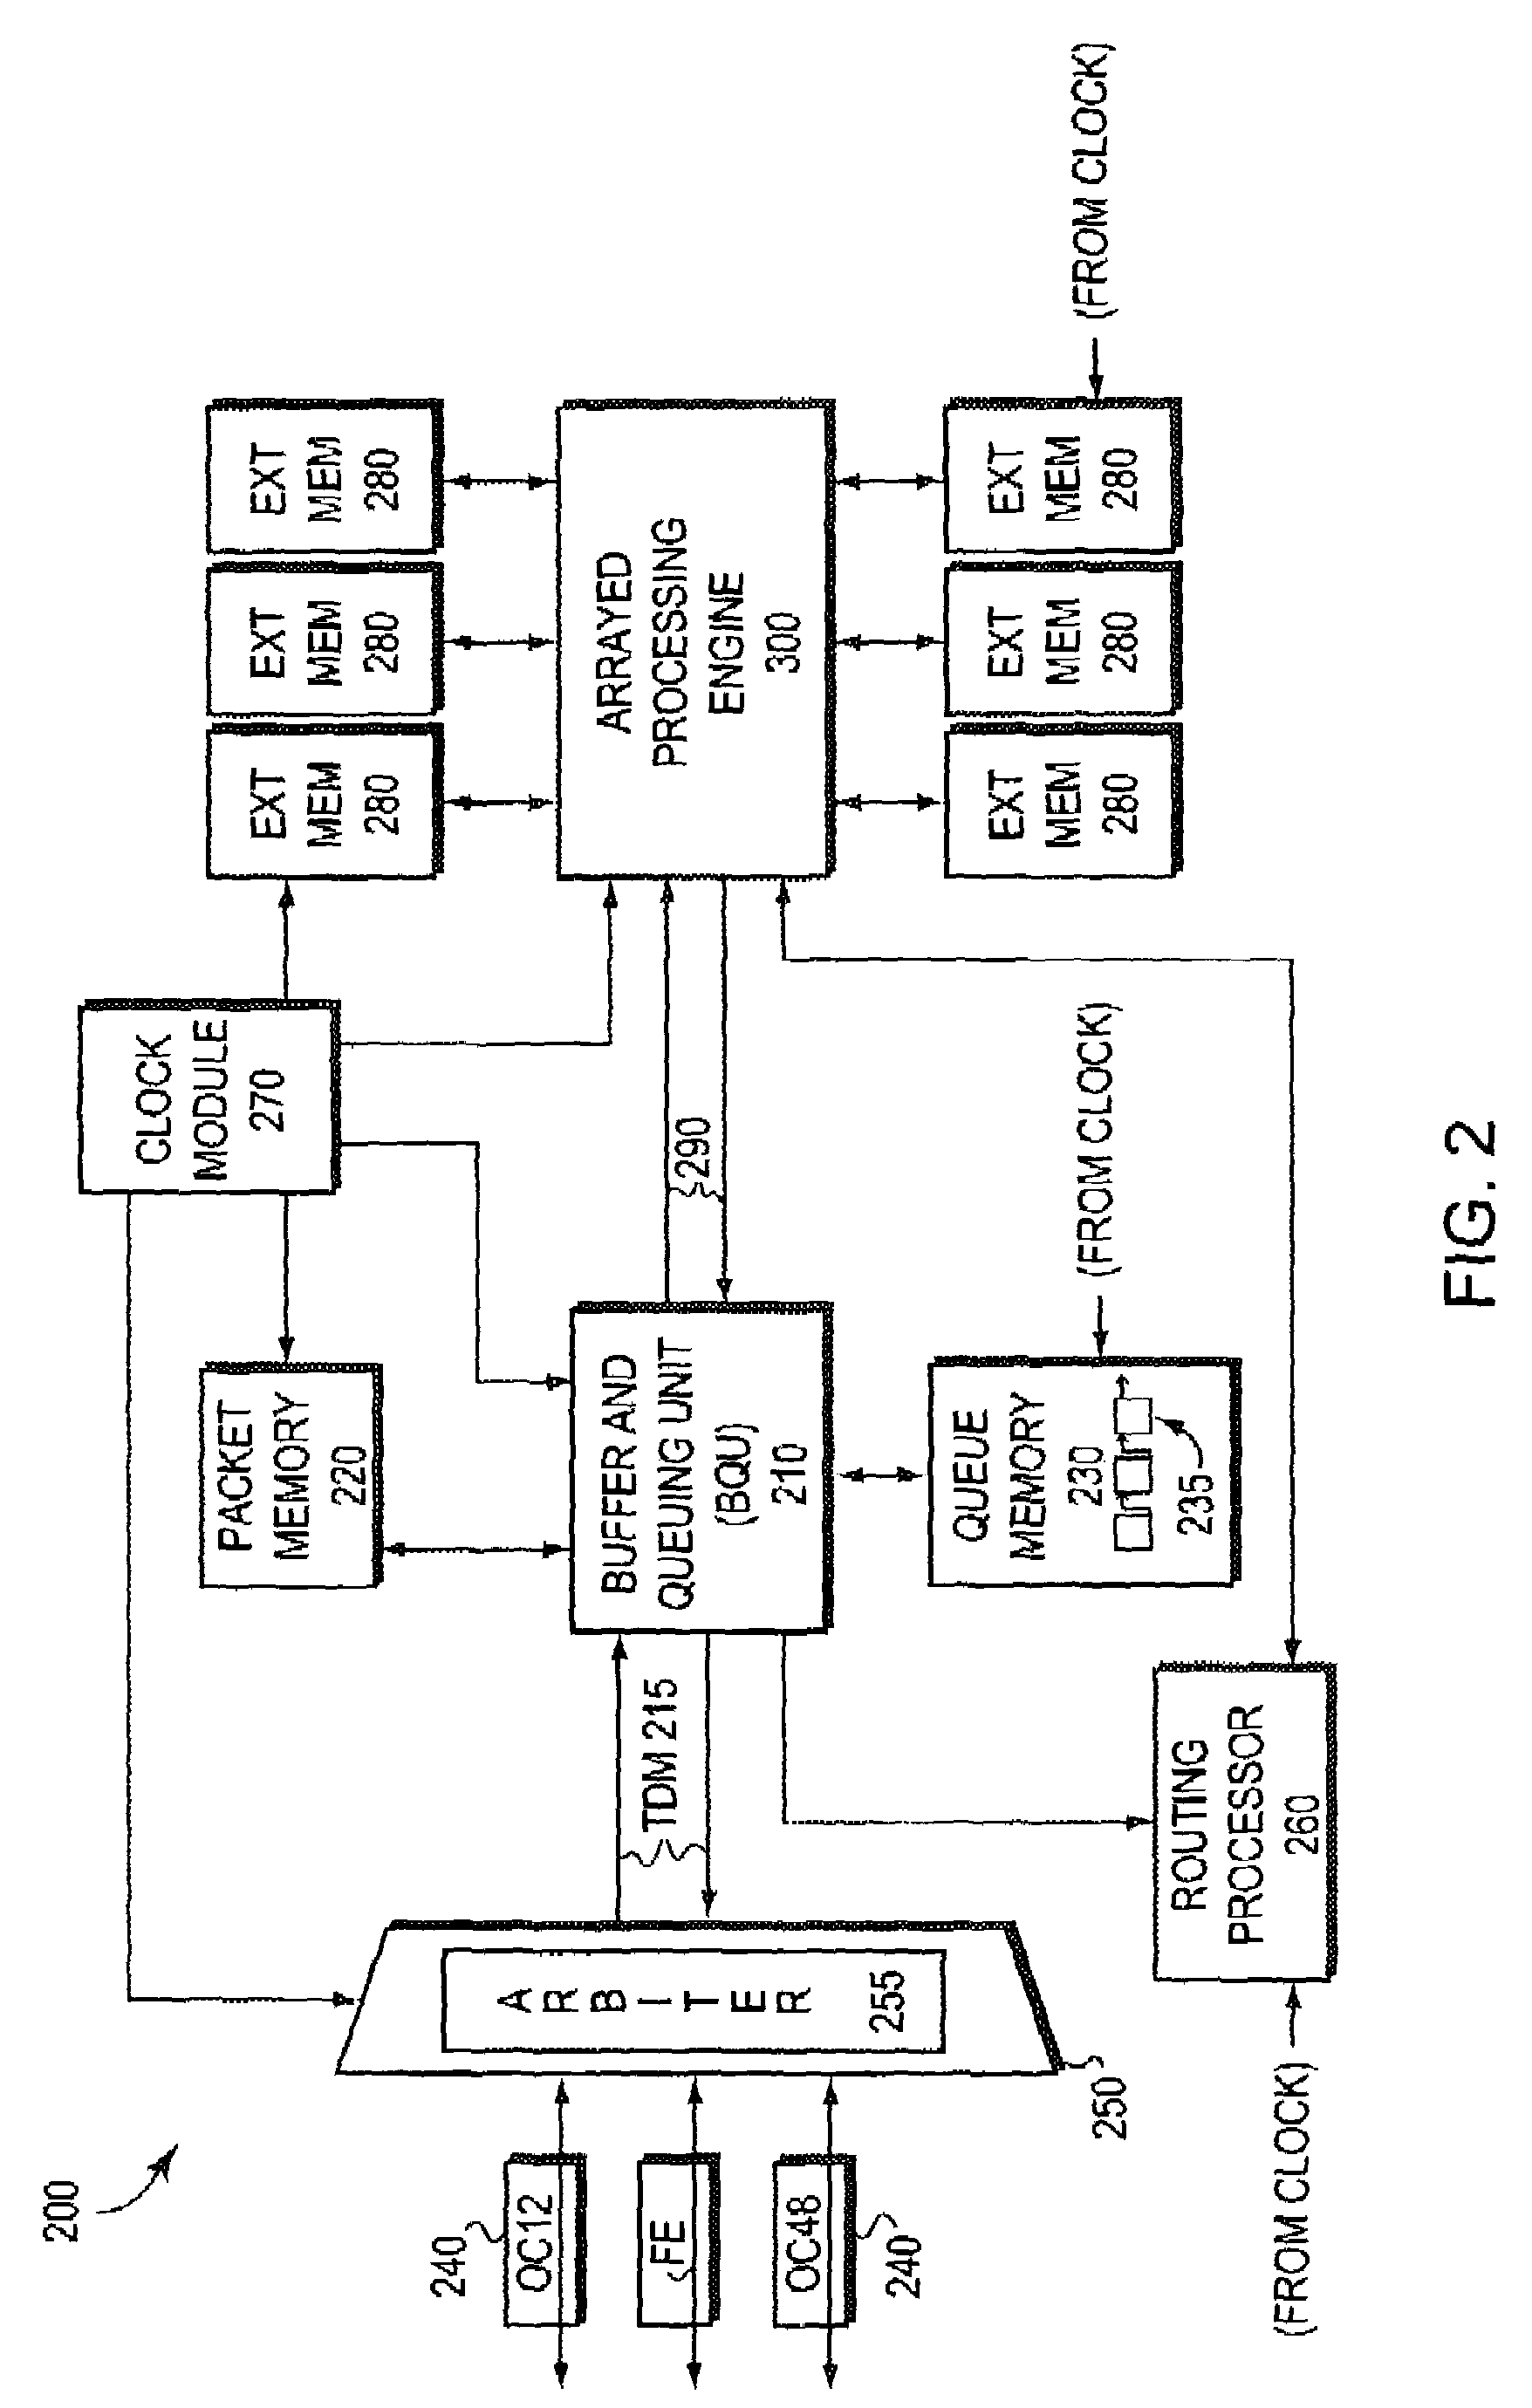 Processor isolation technique for integrated multi-processor systems